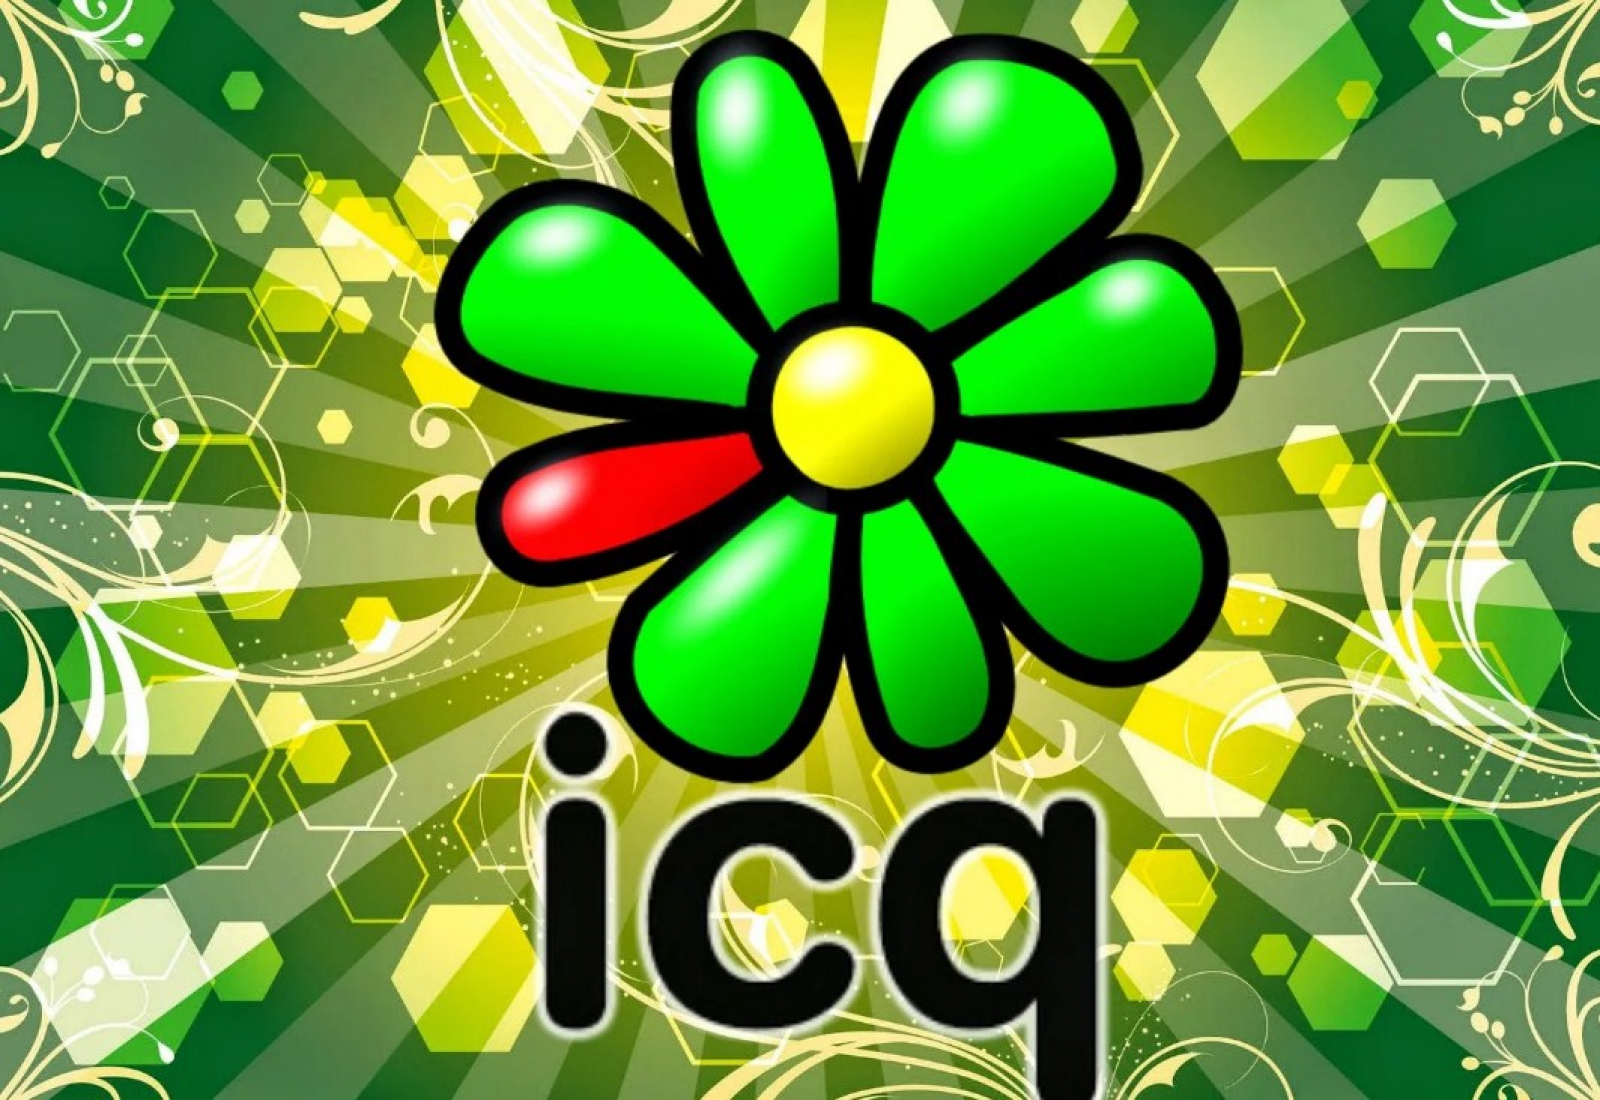 Icq мессенджер. ICQ. ICQ логотип. ICQ фото. Картинки для аськи.